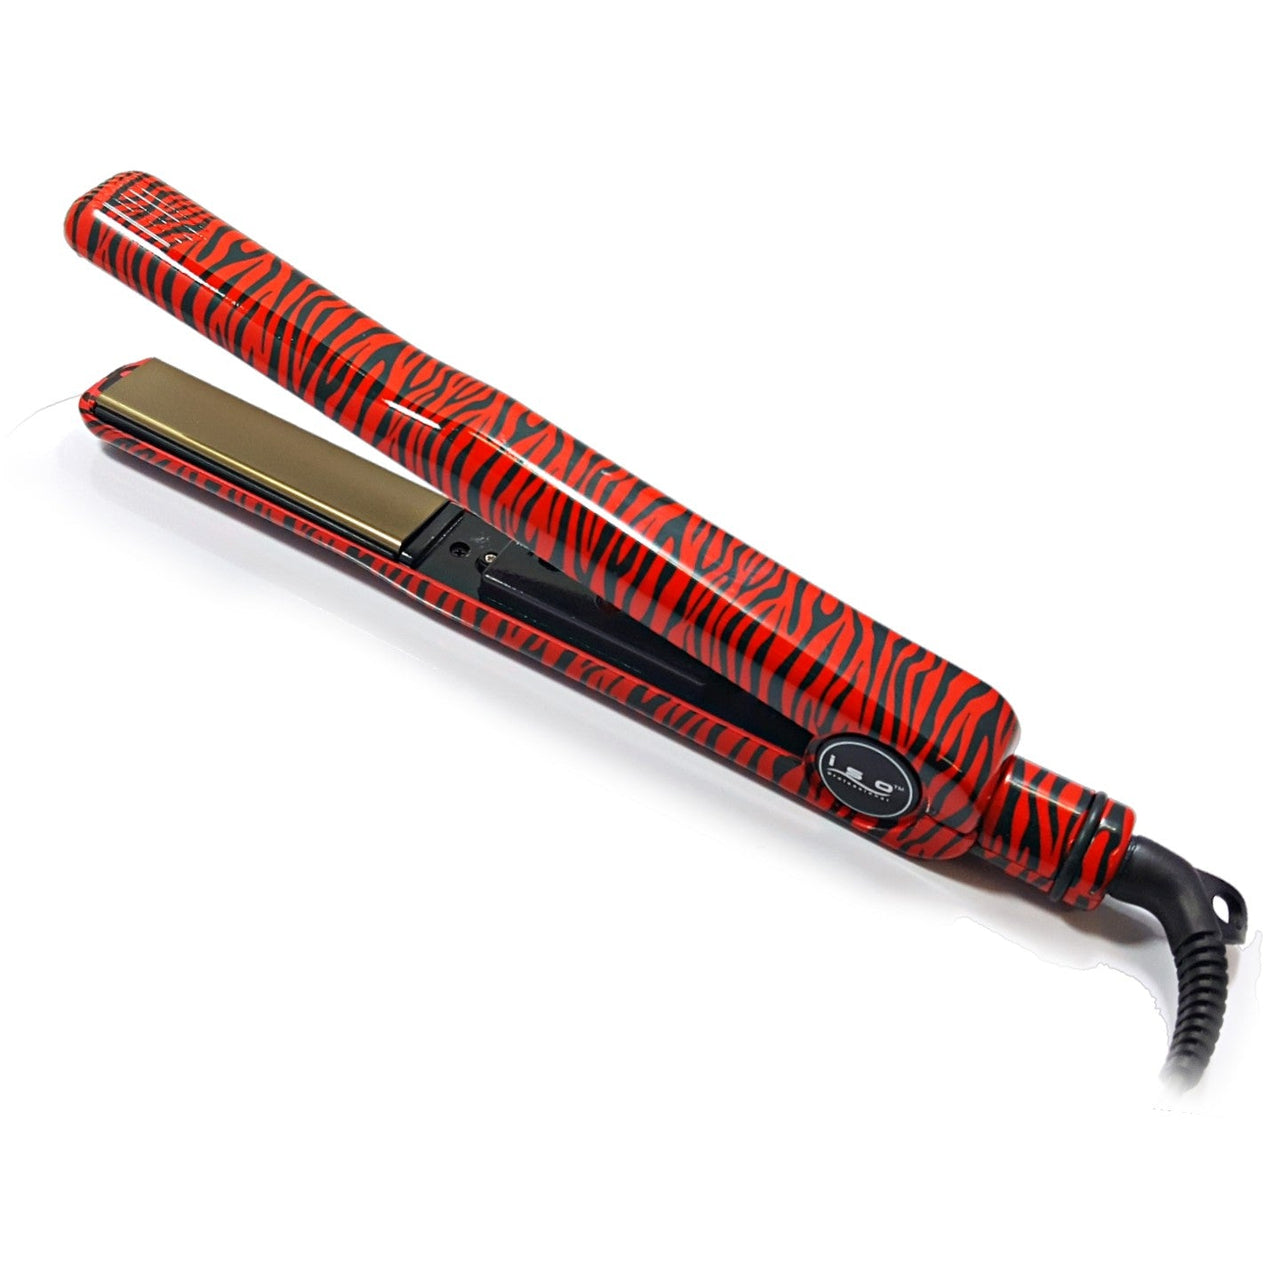 Turbo Silk Limited Edition 1.25" Titanium Flat Iron Hair Straightener with Adjustable Temperatures Red Zebra